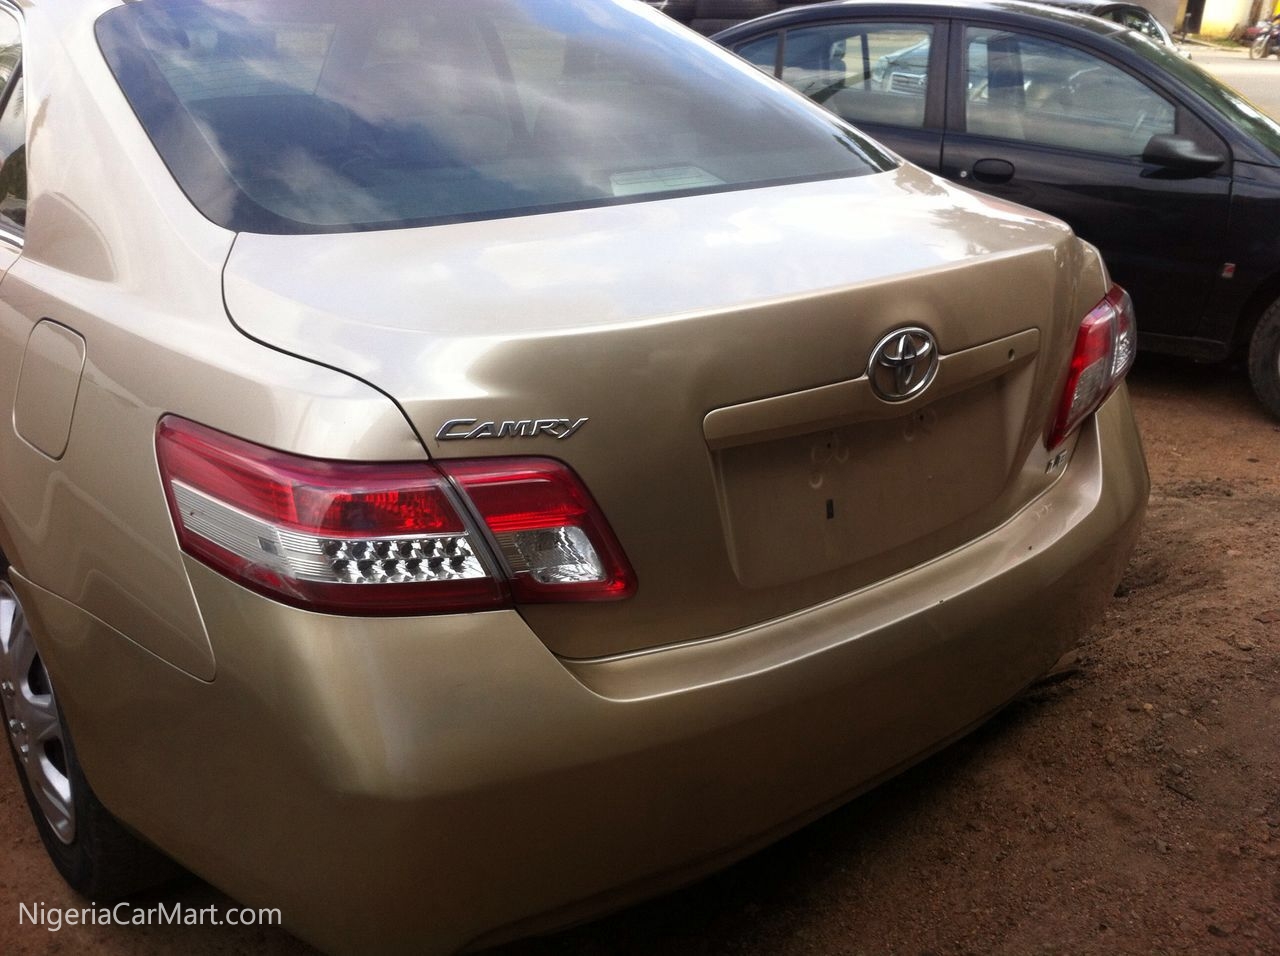 2010 Toyota Camry Le Used Car For Sale In Lagos Nigeria Nigeriacarmart Com